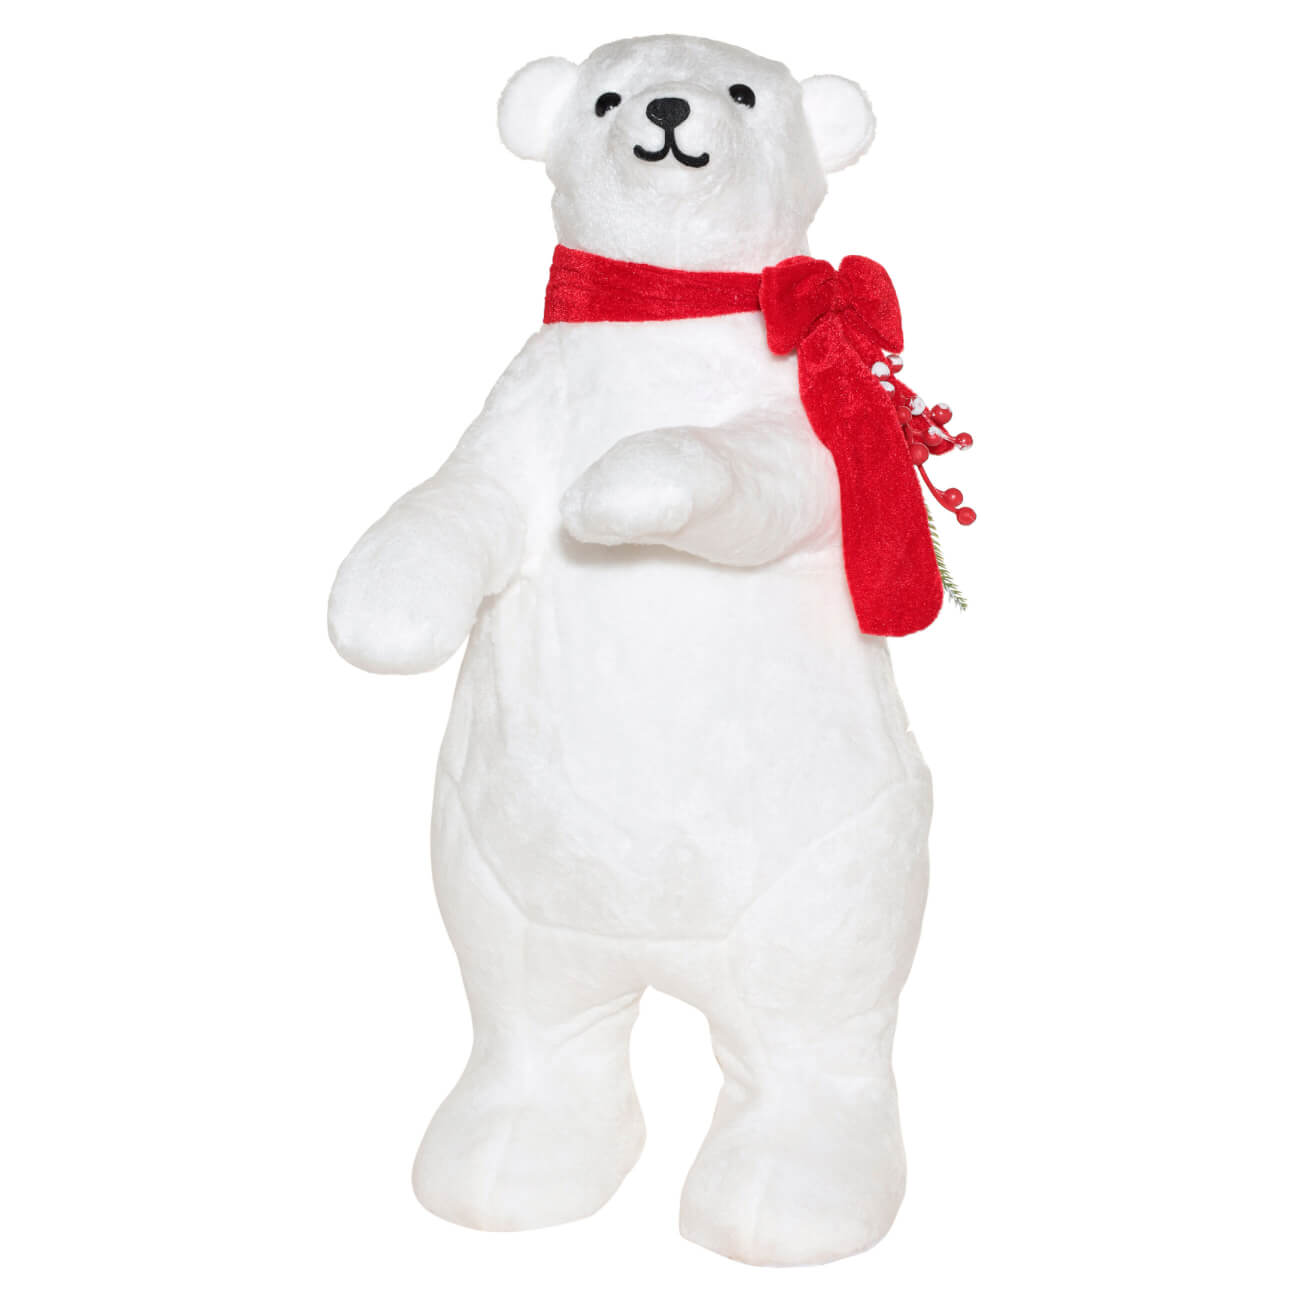 Статуэтка с подсветкой, 60 см, полиэстер/пластик, Белый медведь, Winter white